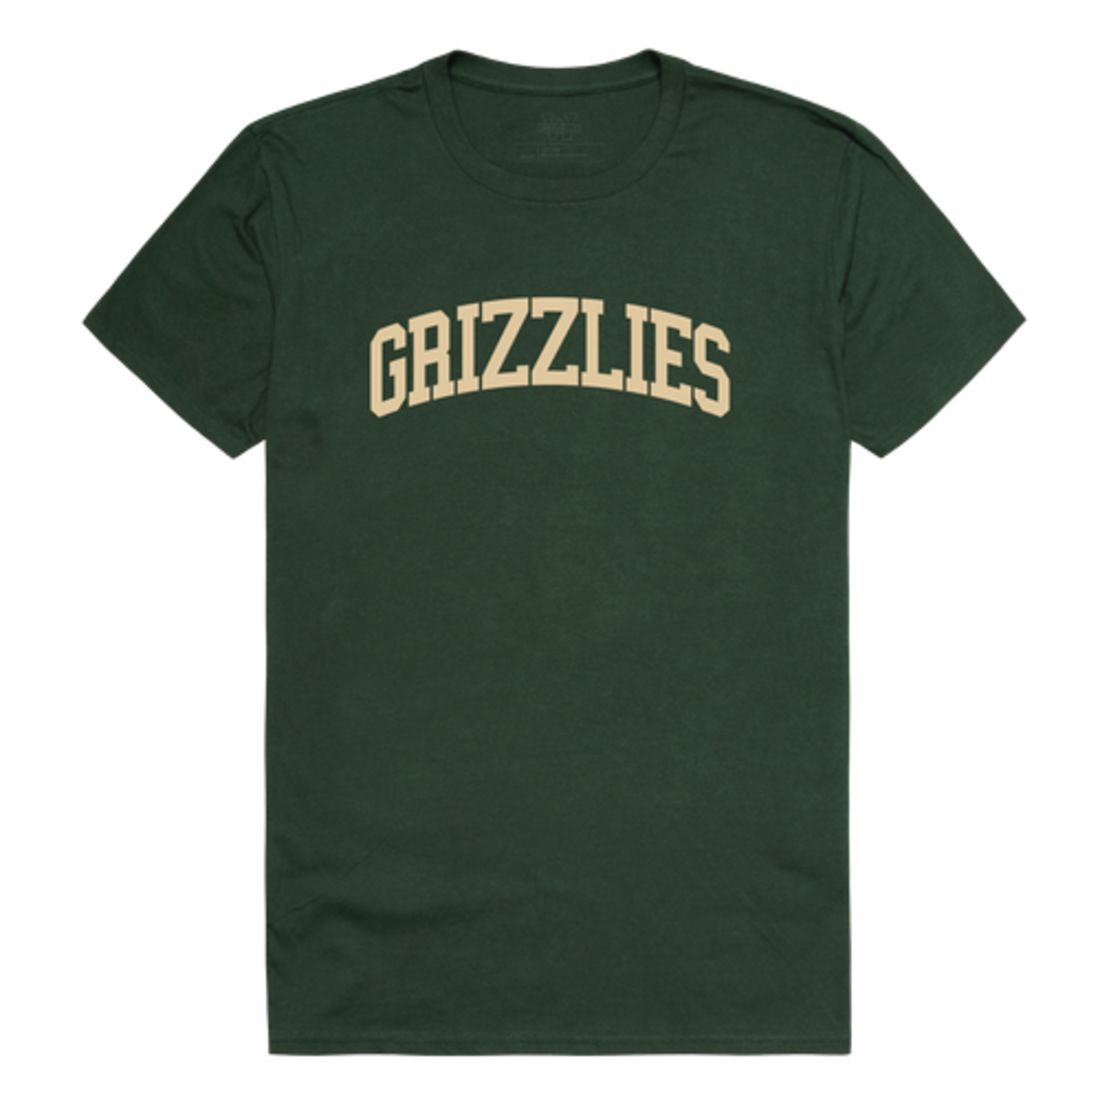 Georgia Gwinnett College Grizzlies Collegiate T-Shirt Tee